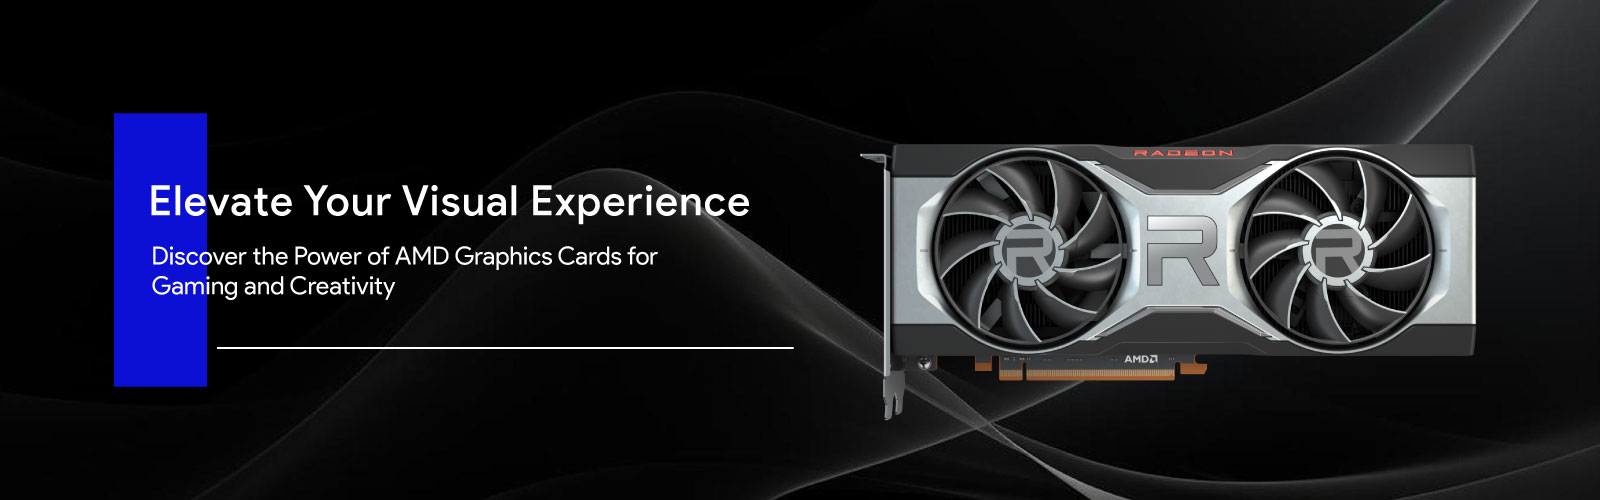 AMD-Graphics-Cards